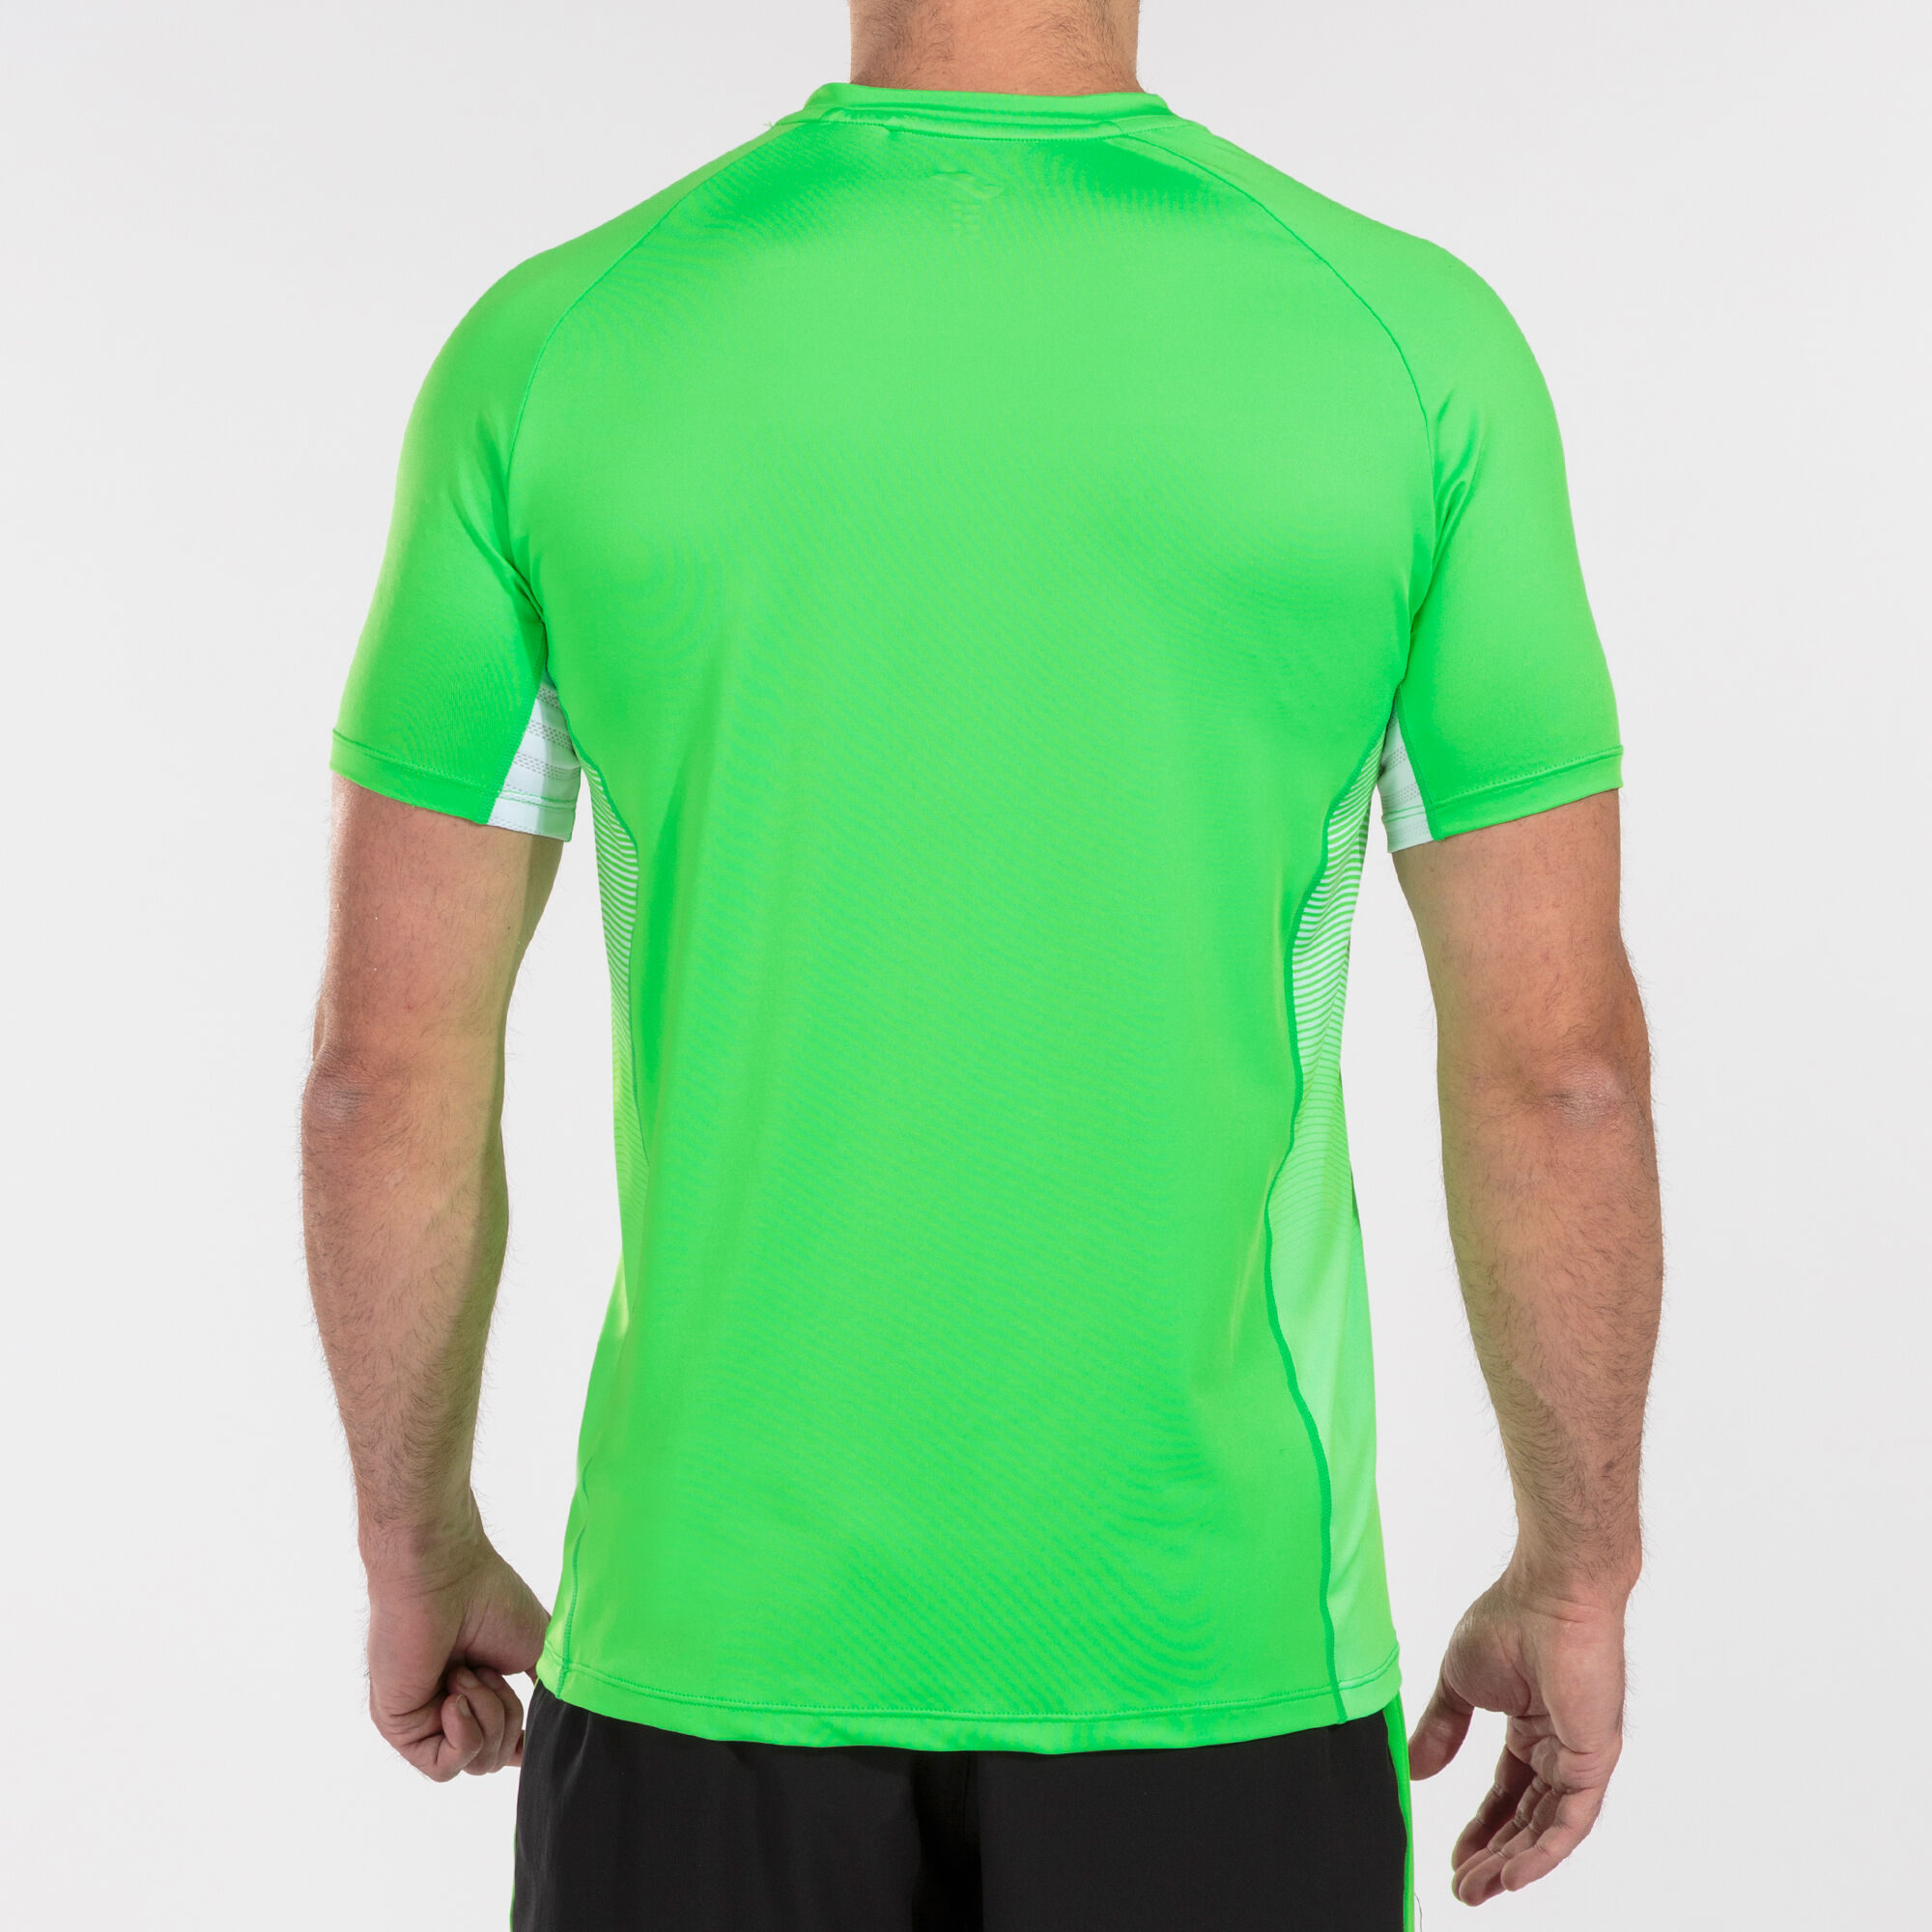 Shirt short sleeve man Elite VII fluorescent green white